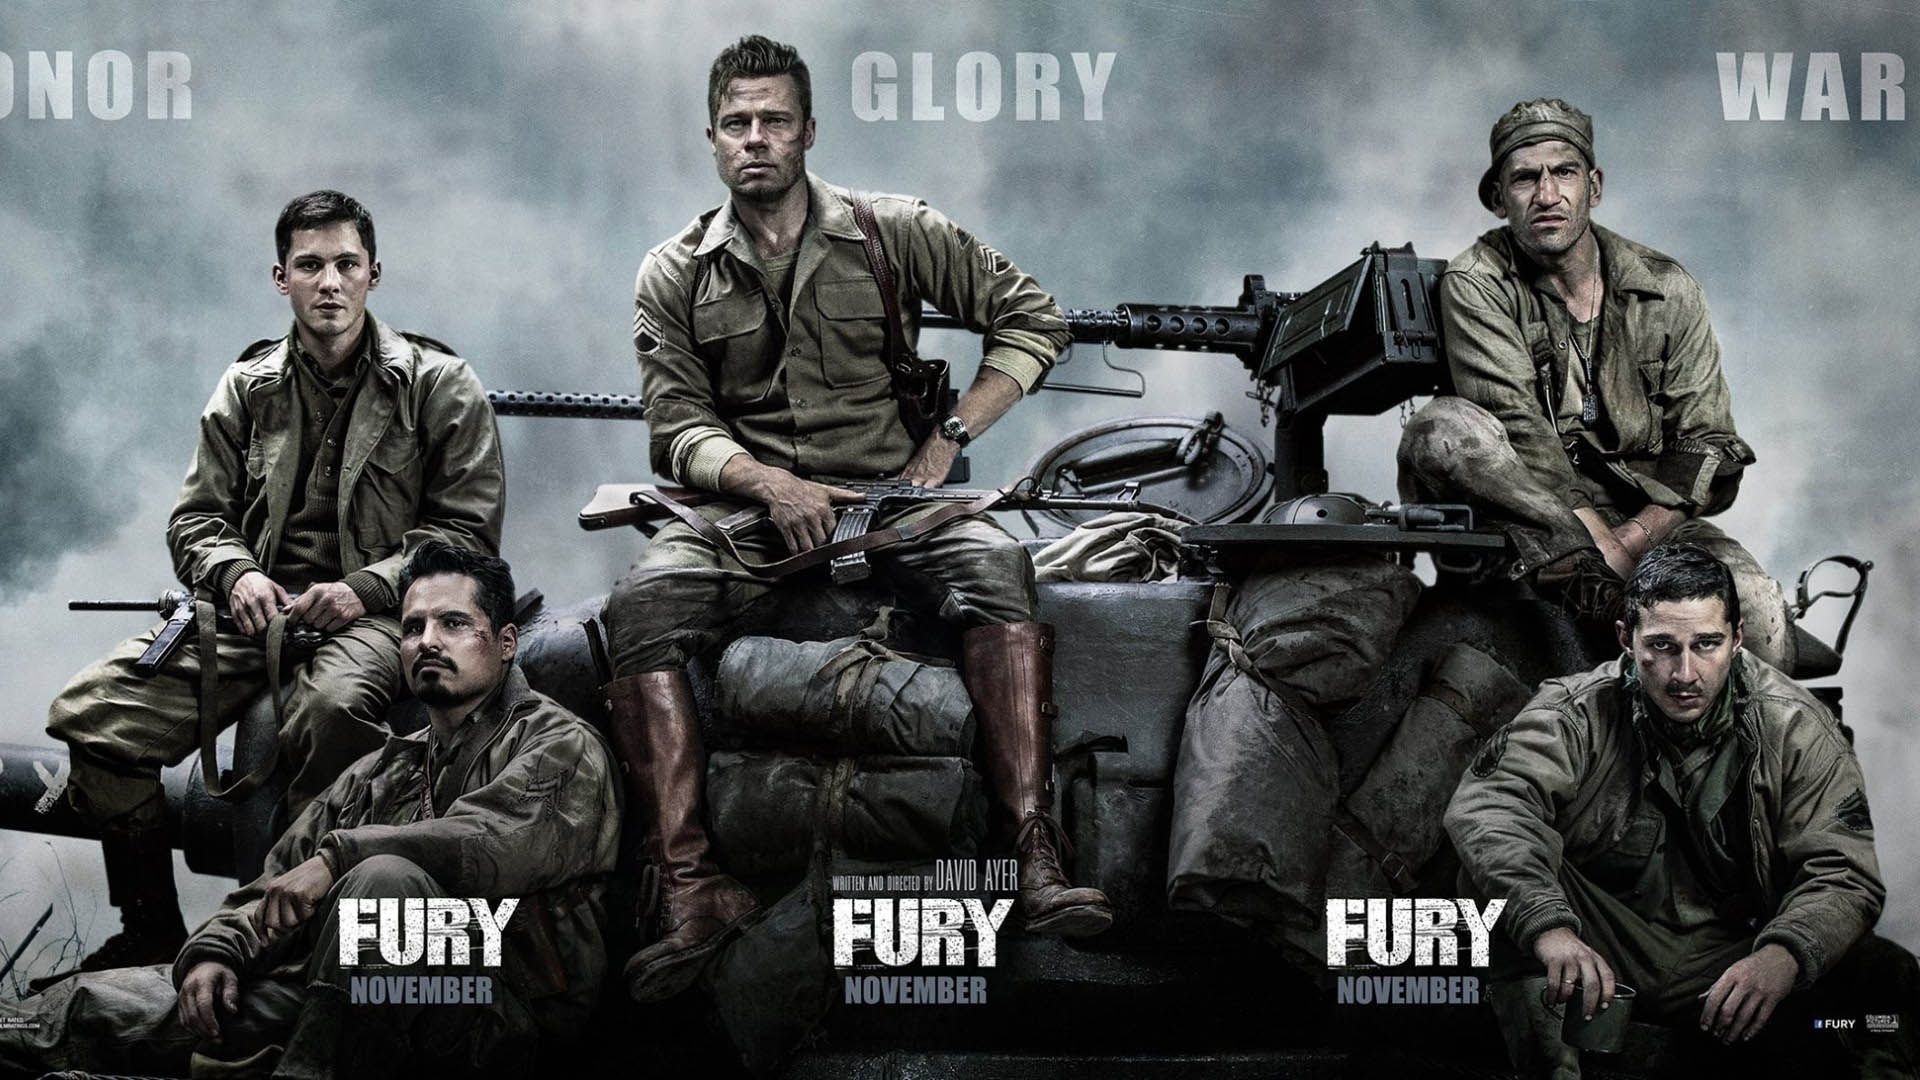 Fury Movie Poster Wallpaper HD. Fury movie, Fury